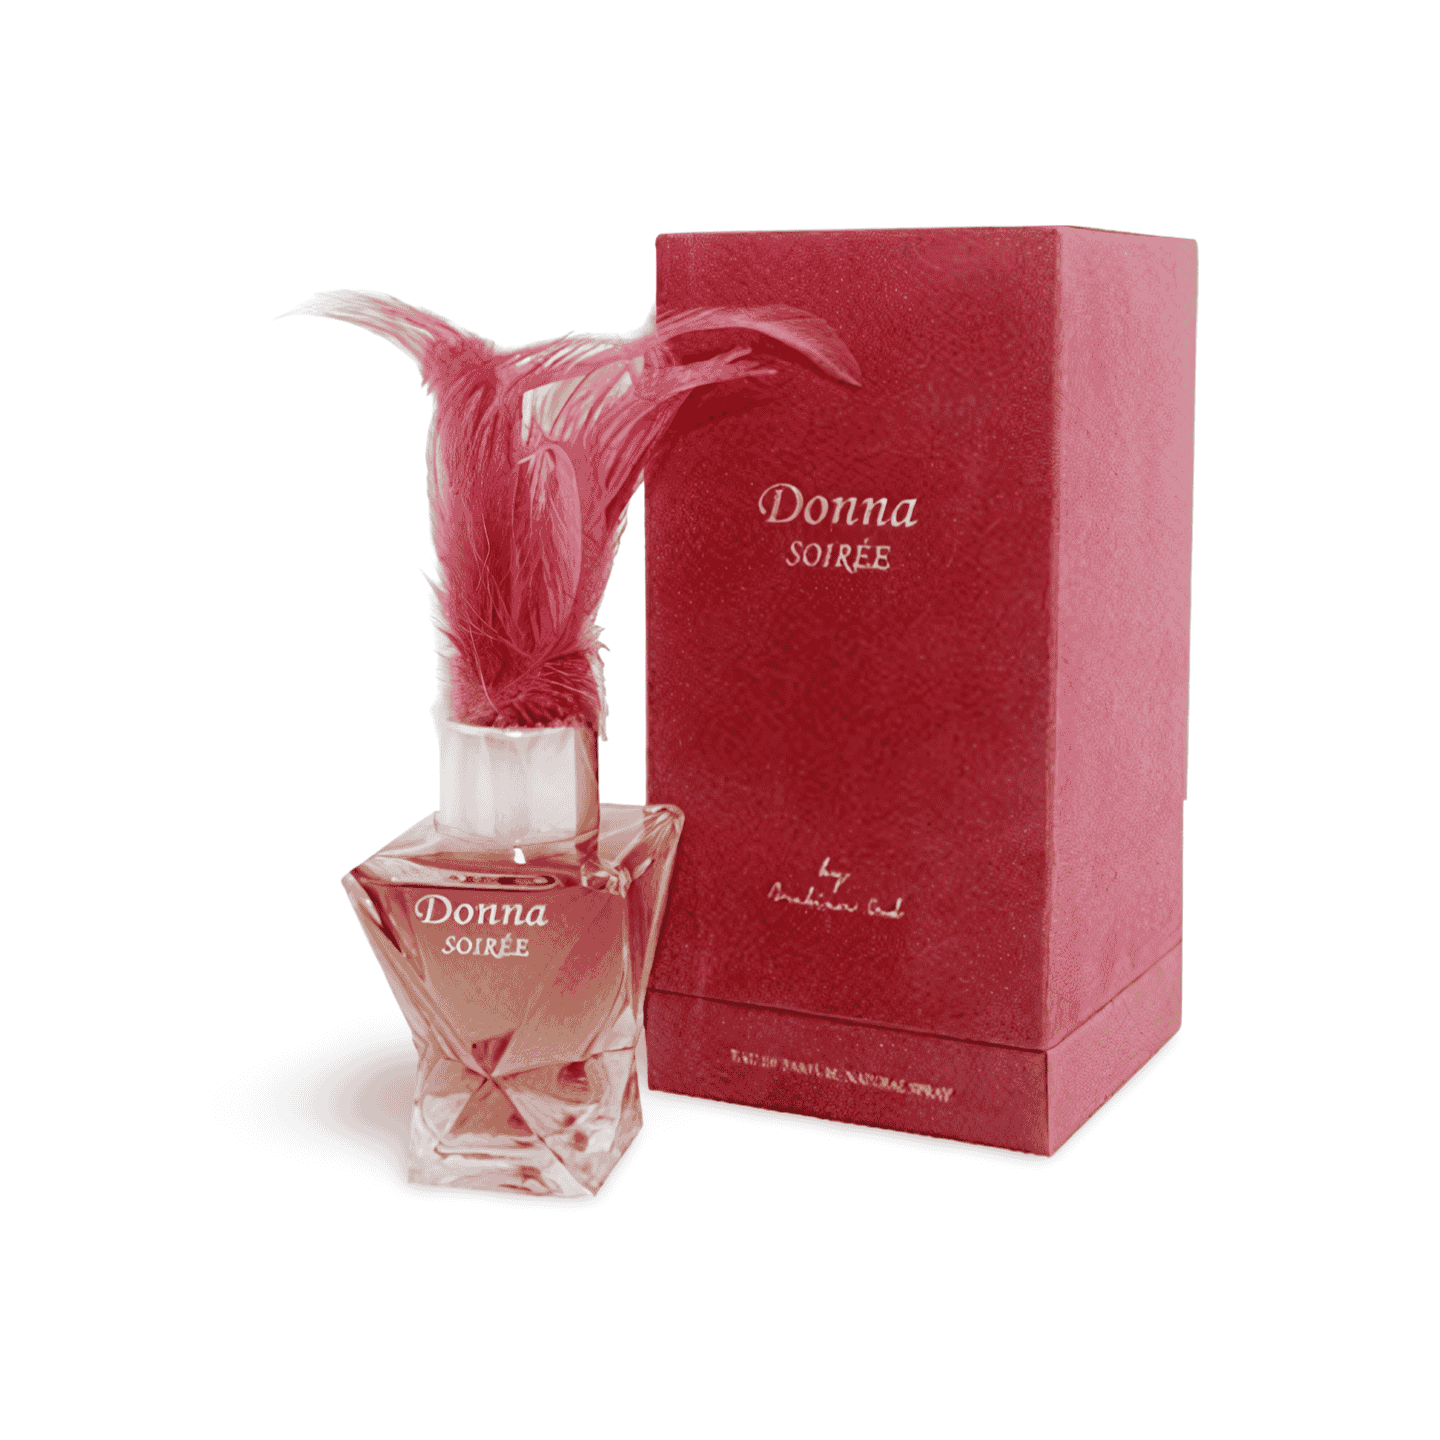 Donna Soiree Perfume